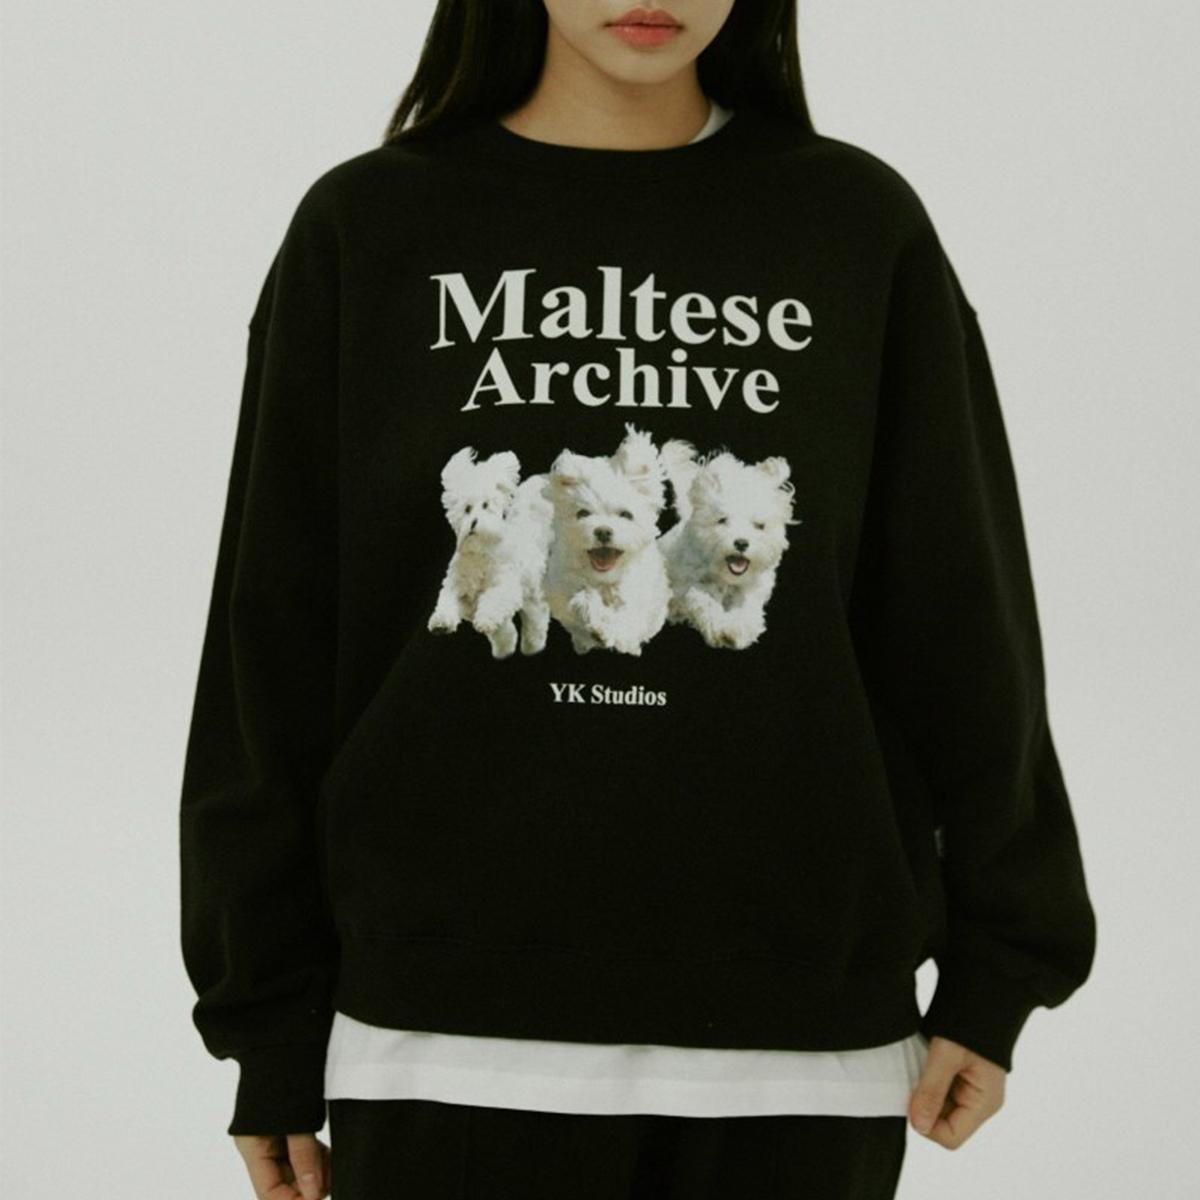 Maltese Archive Sweatshirt (Black)